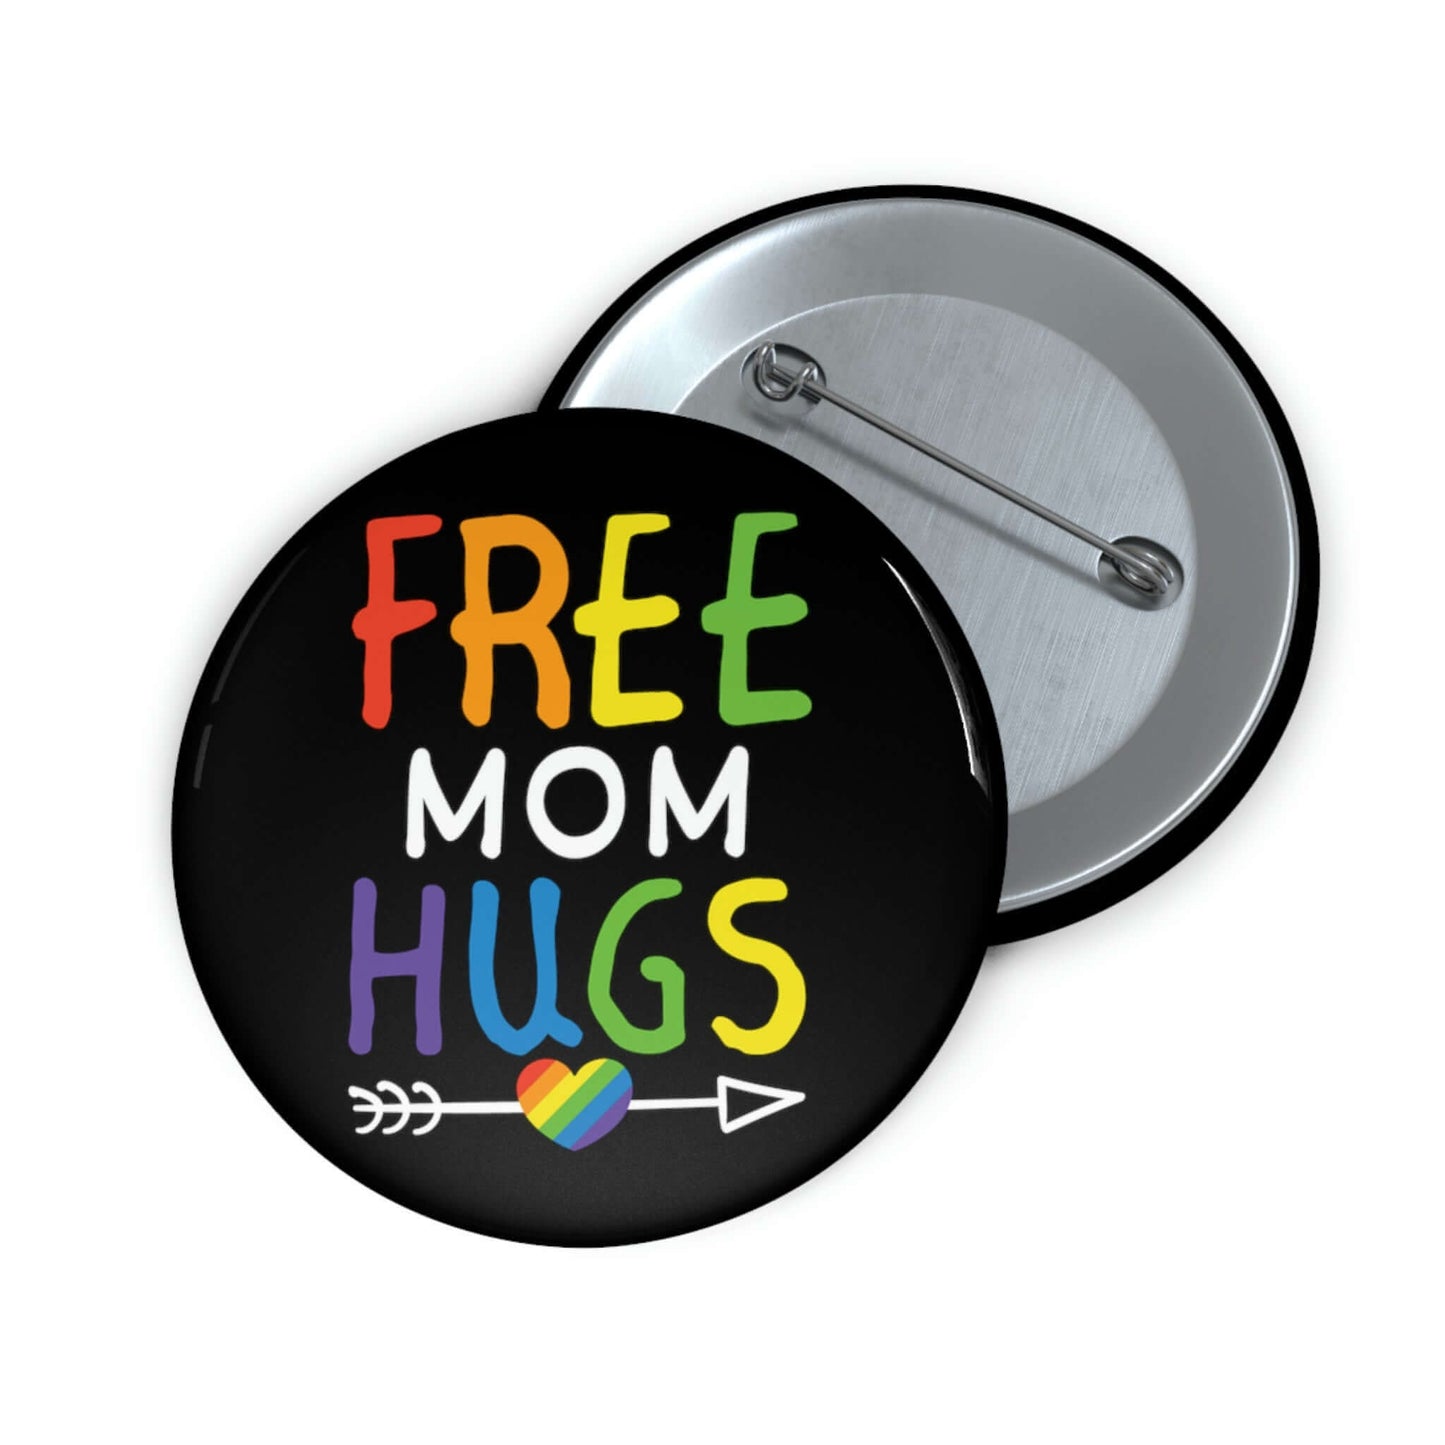 Free Mom hugs LGBTQ ally pinback button